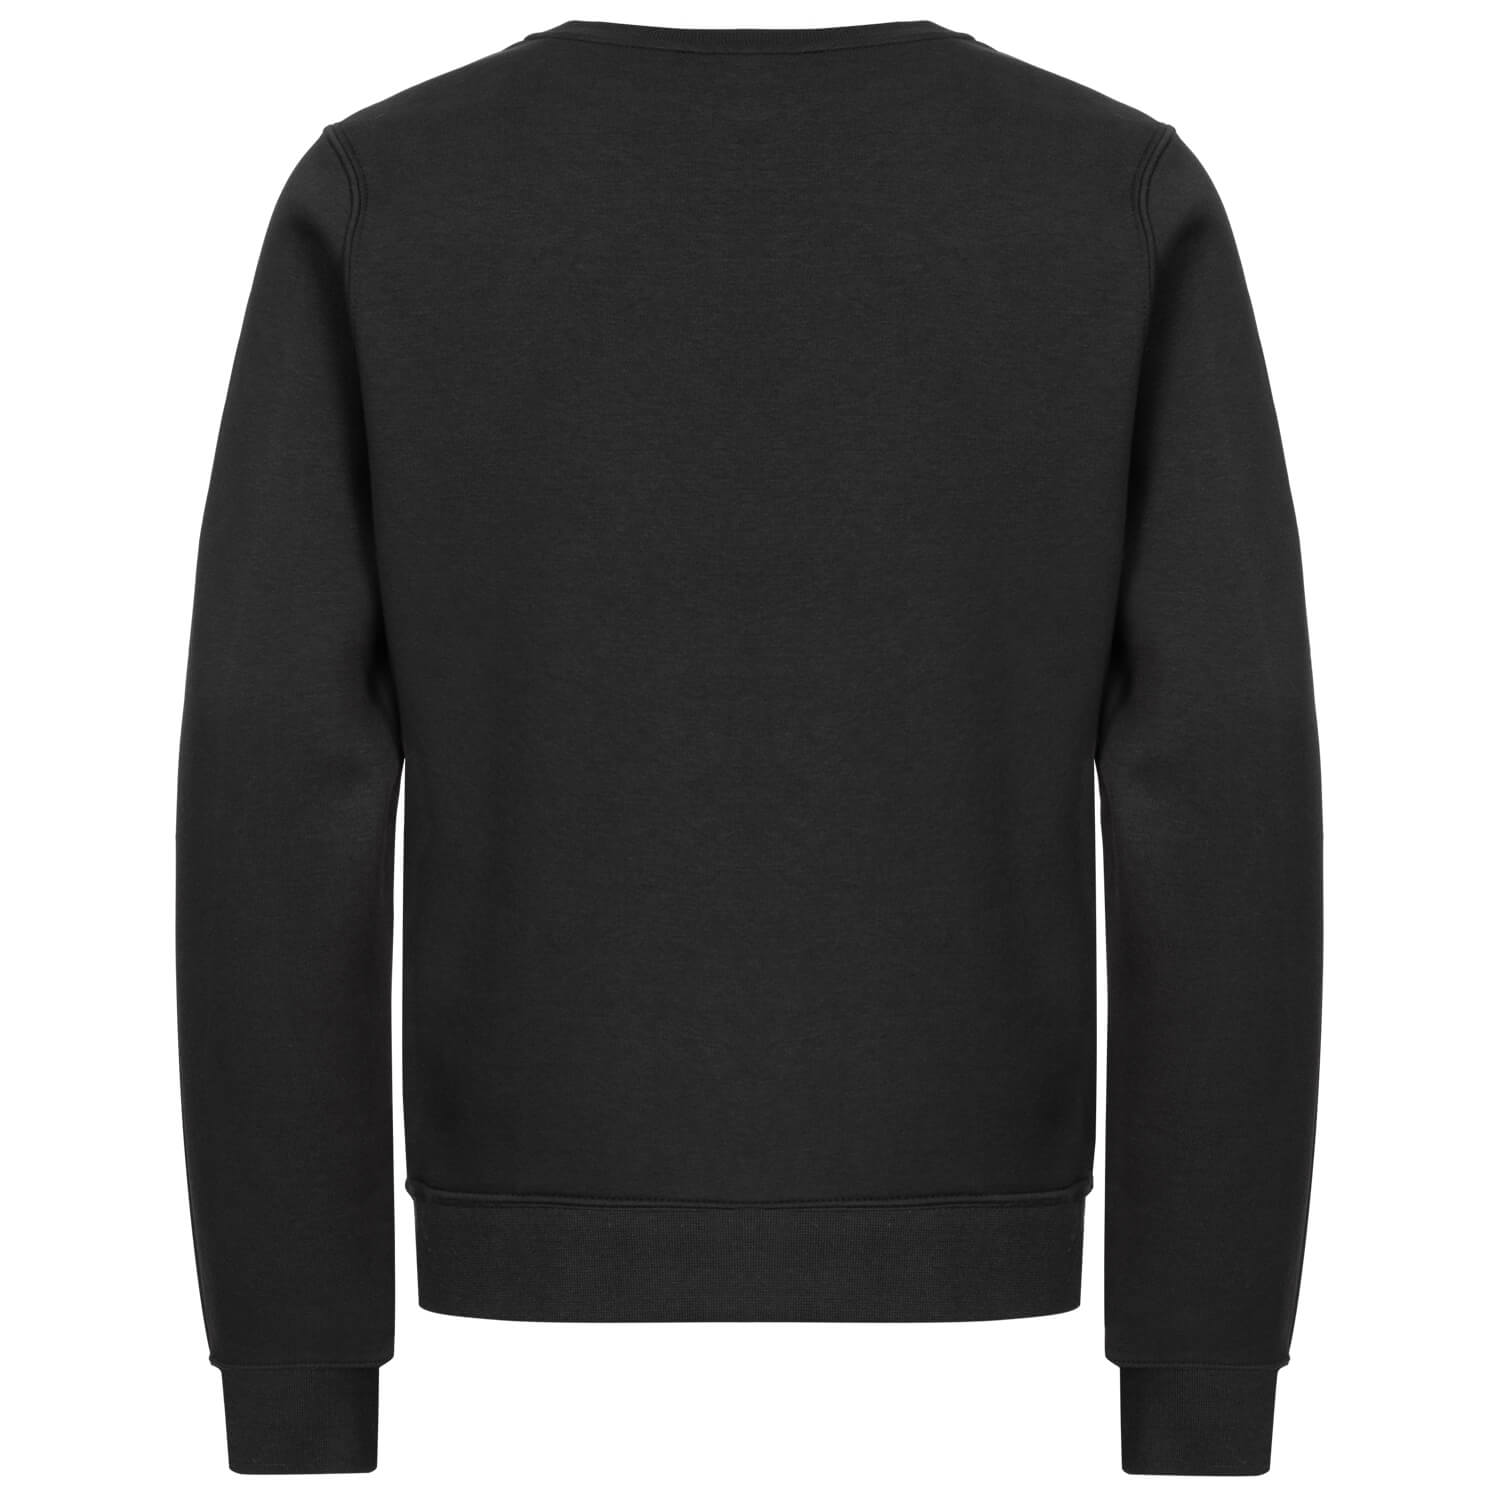 Bild 2: Nike Kids Sweater Basic schwarz